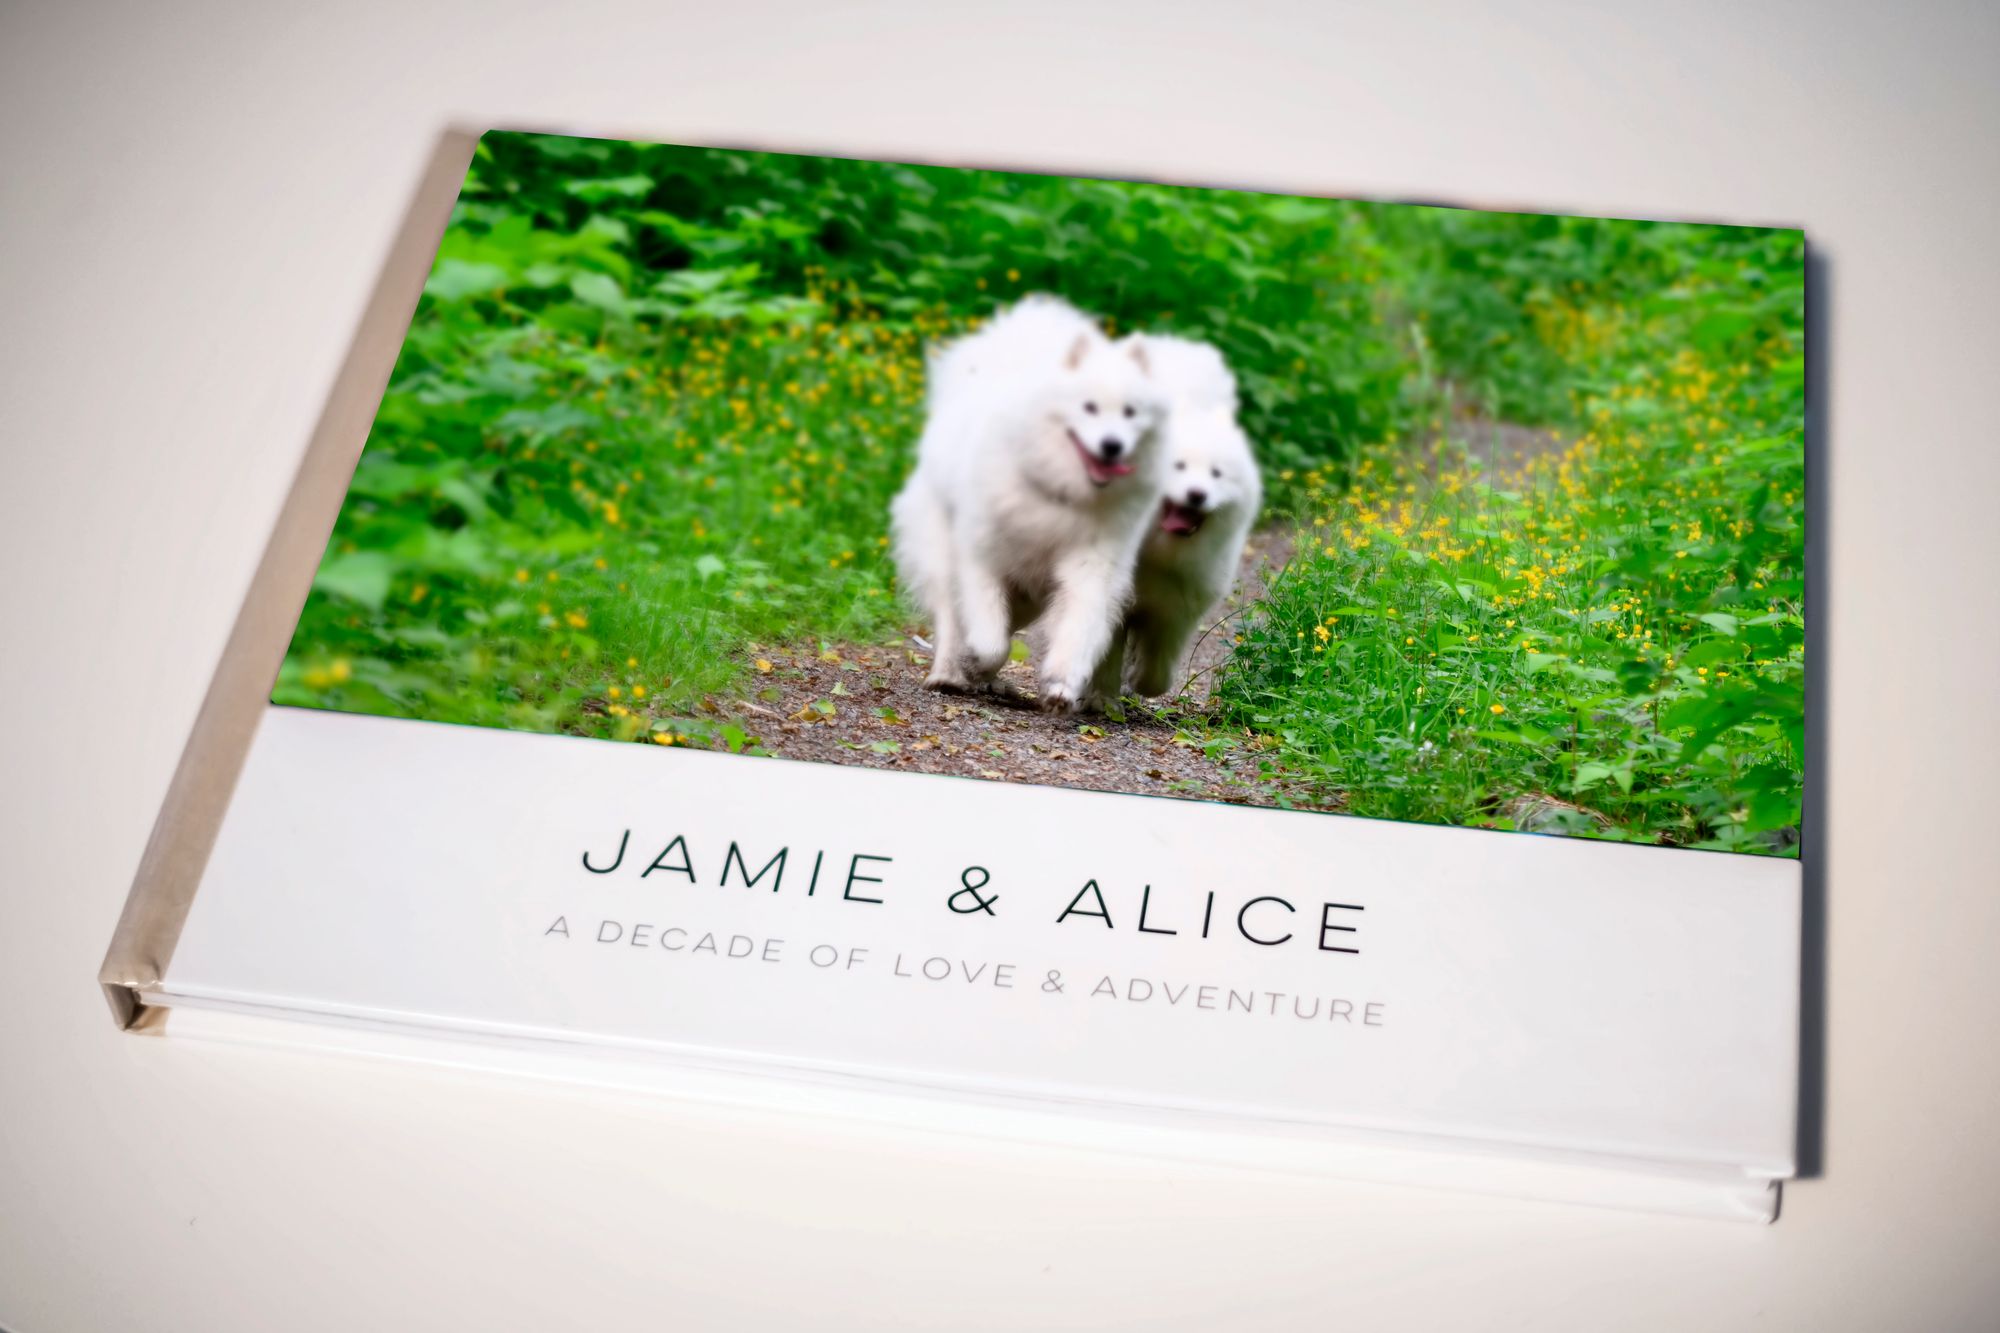 A decade of Jamie & Alice